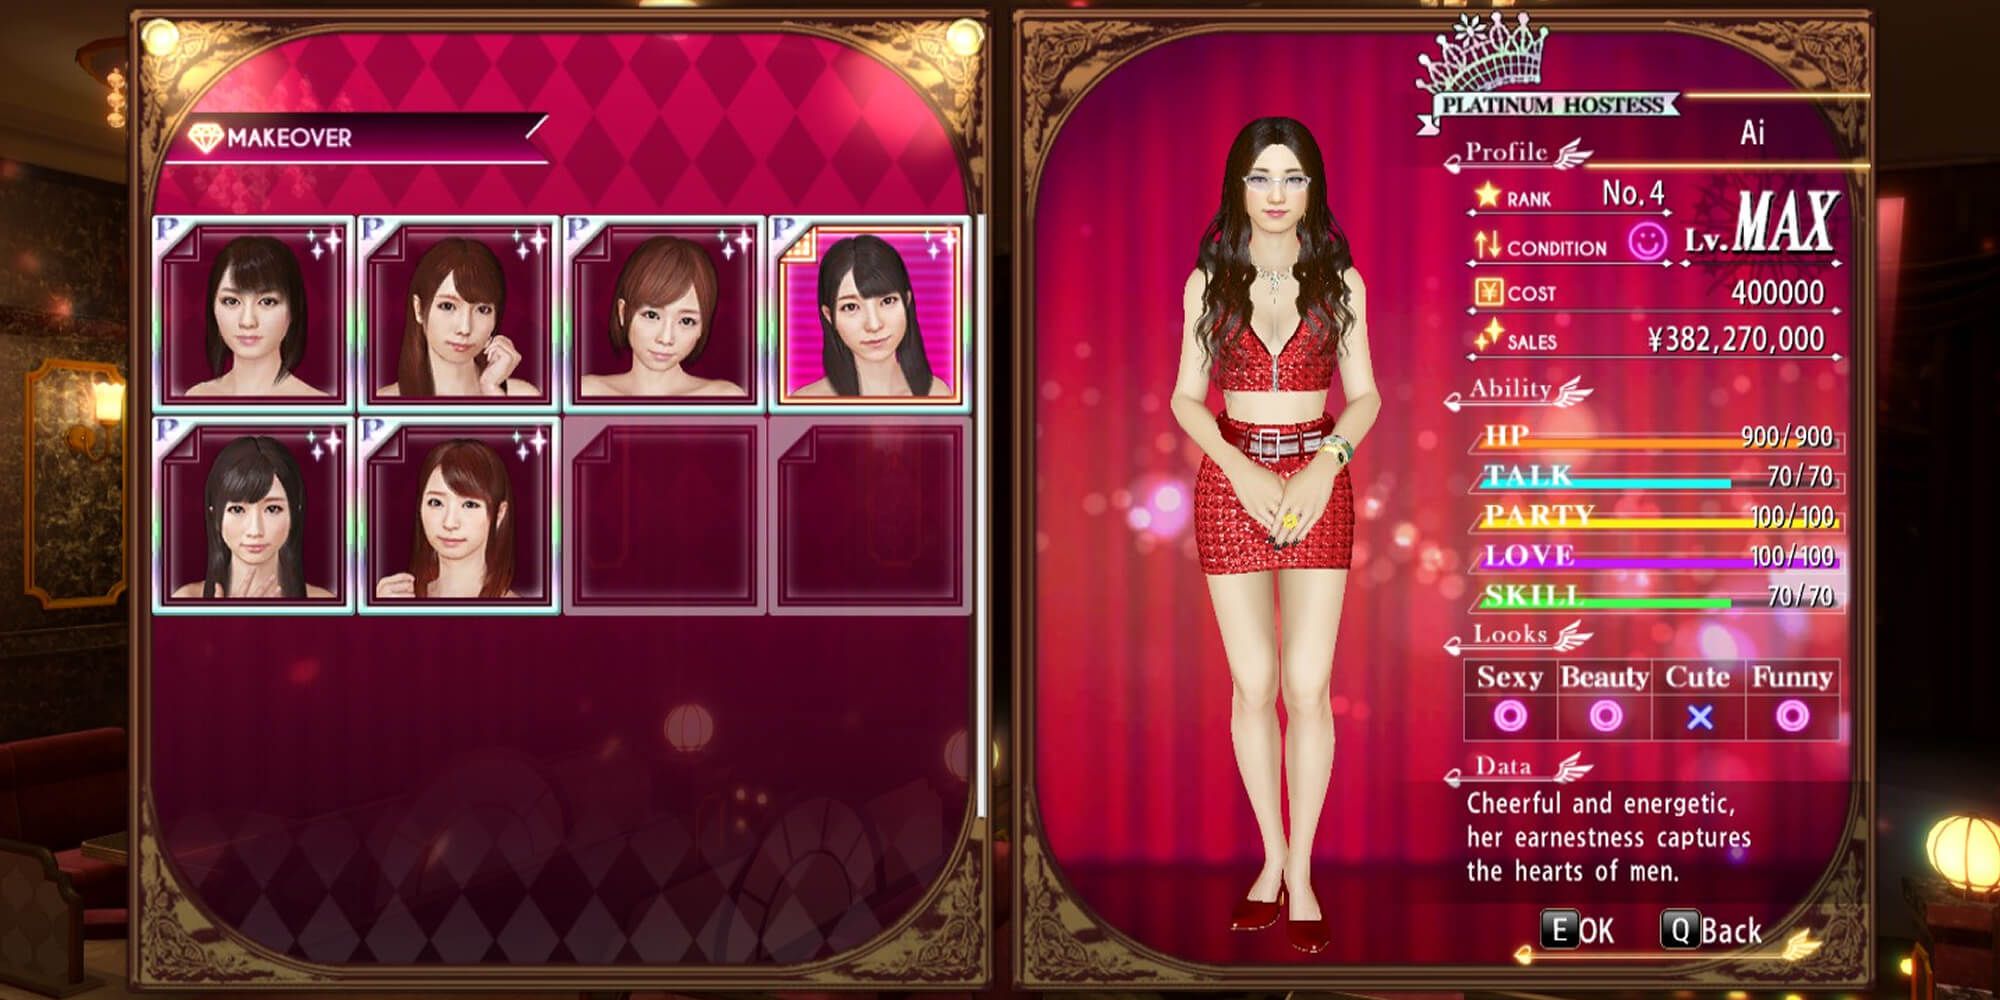 The Hostess Ai's Profile Page